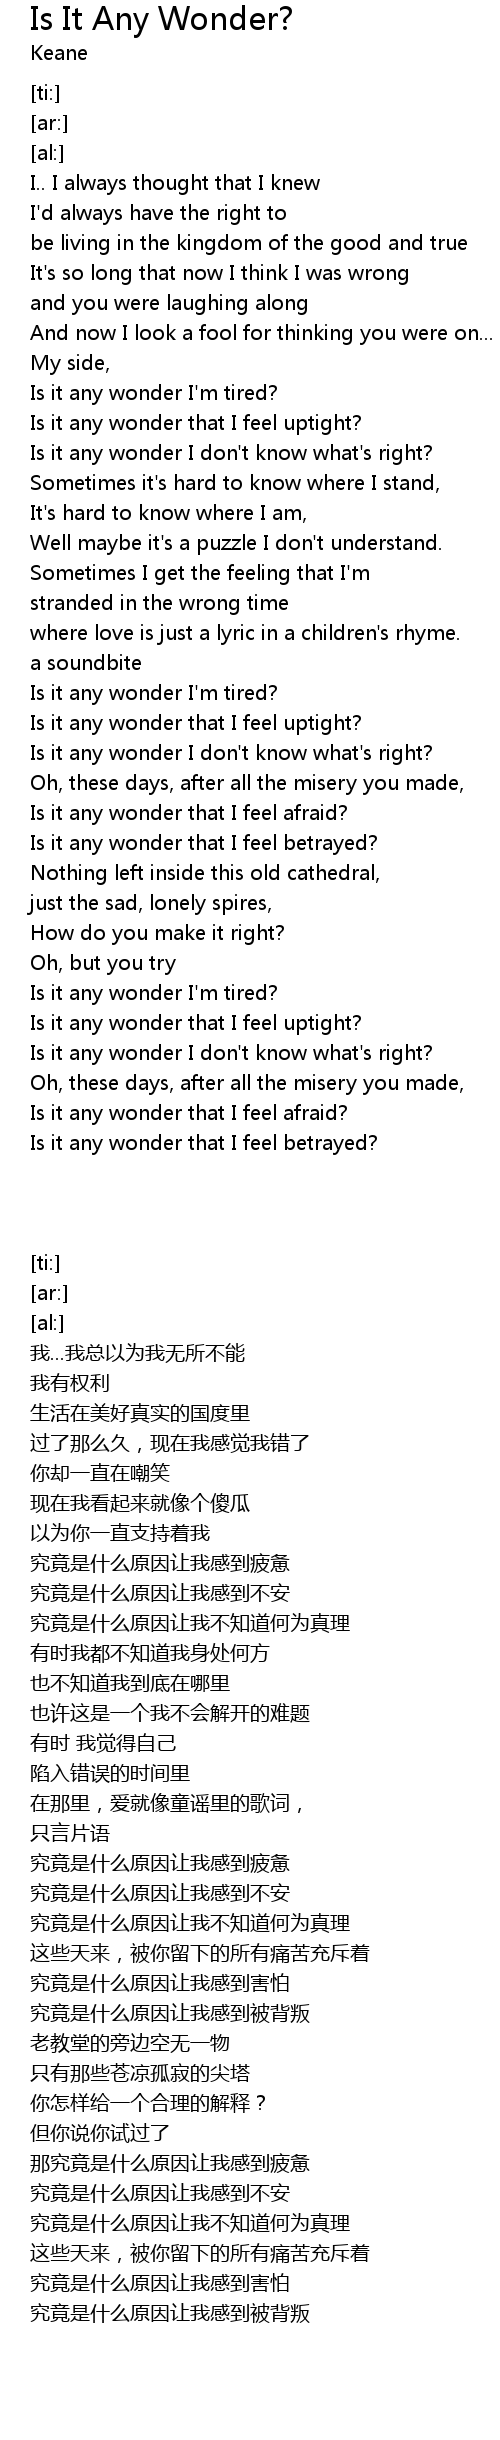 Is It Any Wonder? Lyrics